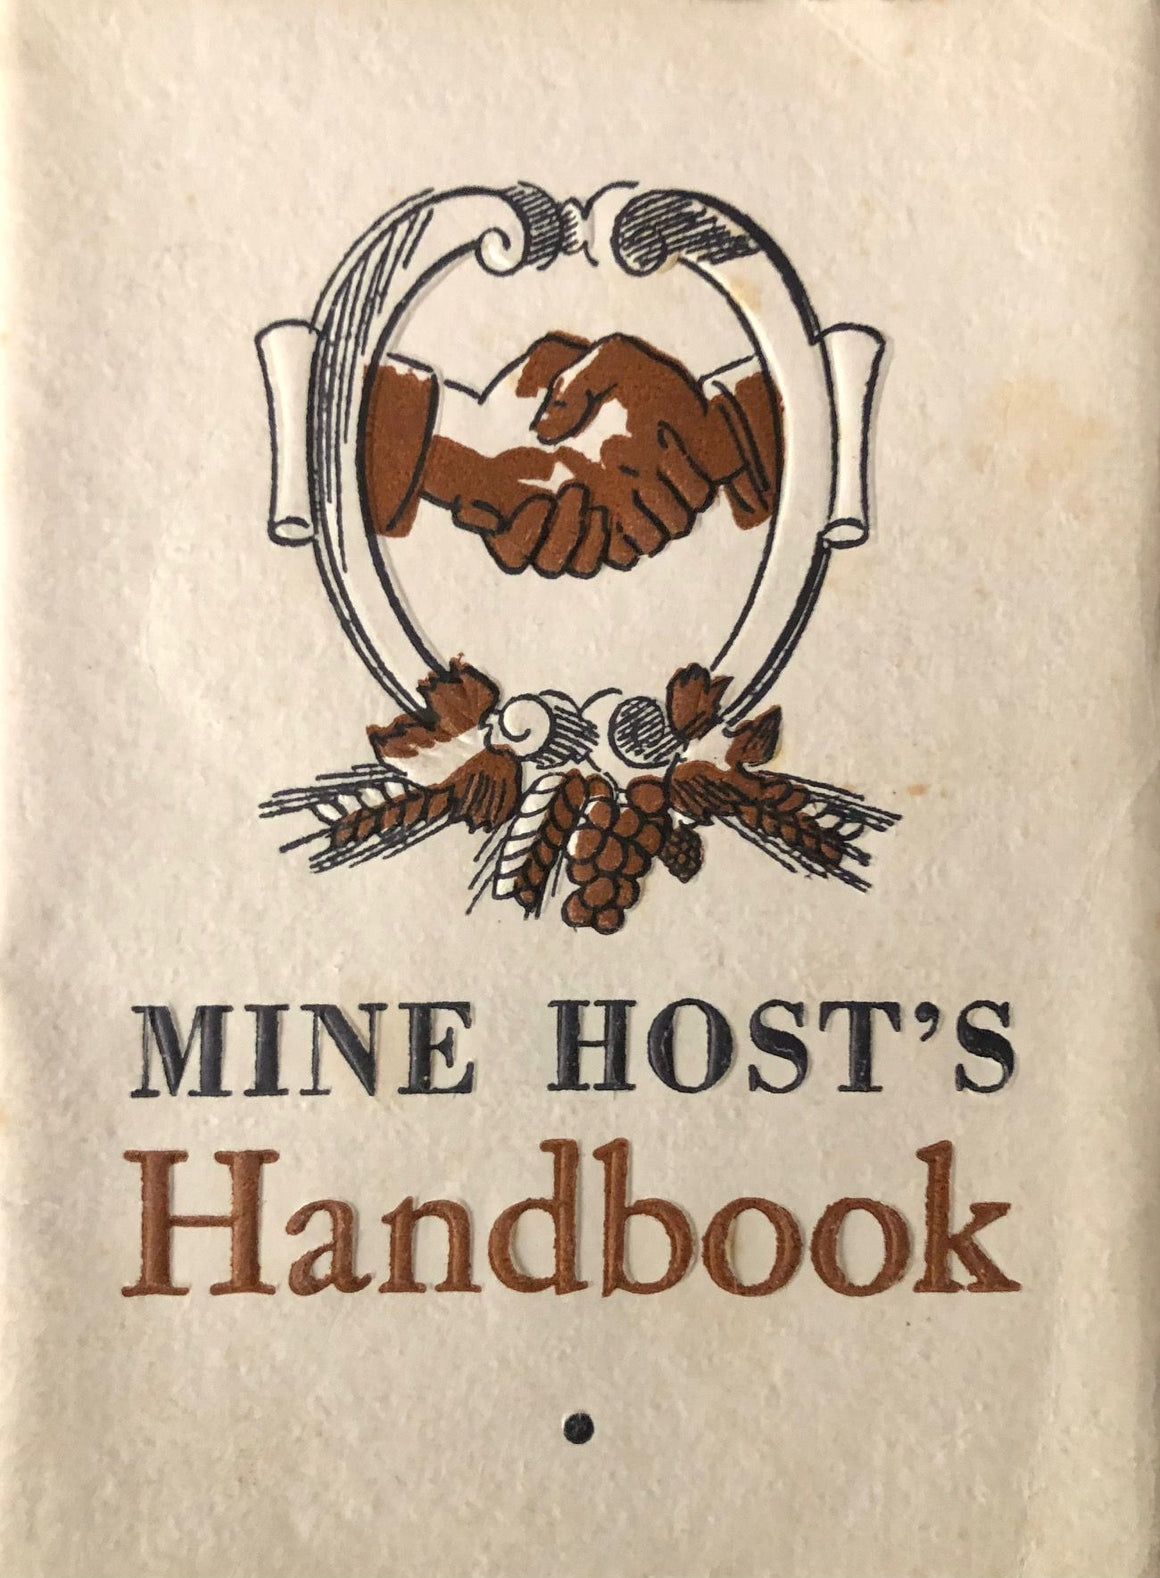 (*NEW ARRIVAL*) (Cocktails) Mine Host's Handbook